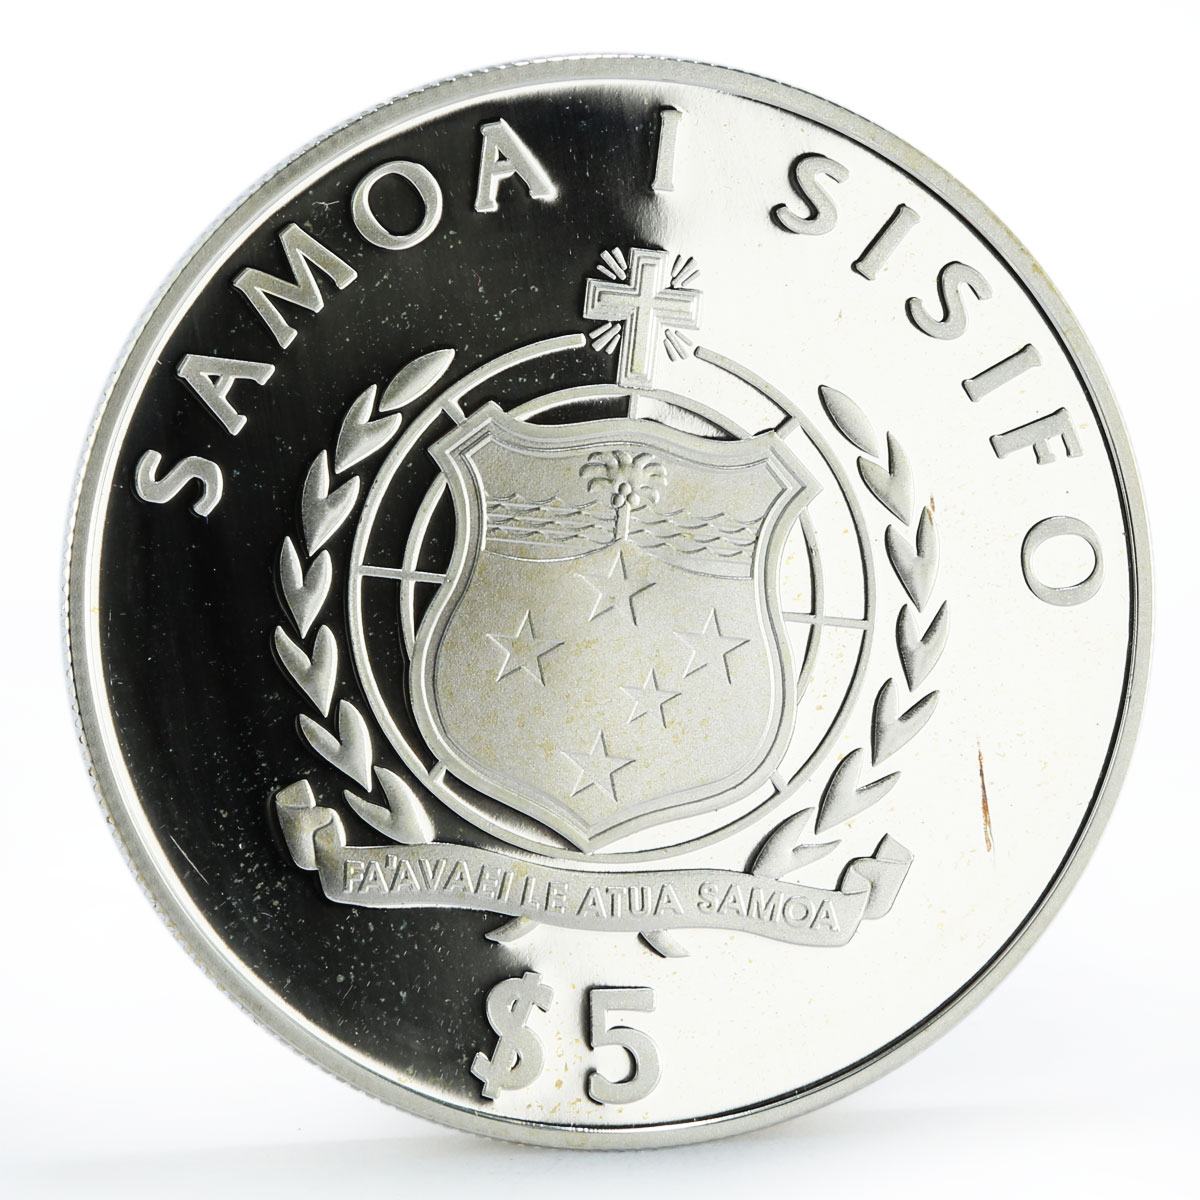 Samoa 5 dollars Beijing Olympic Games series Runner proof silver coin 2008